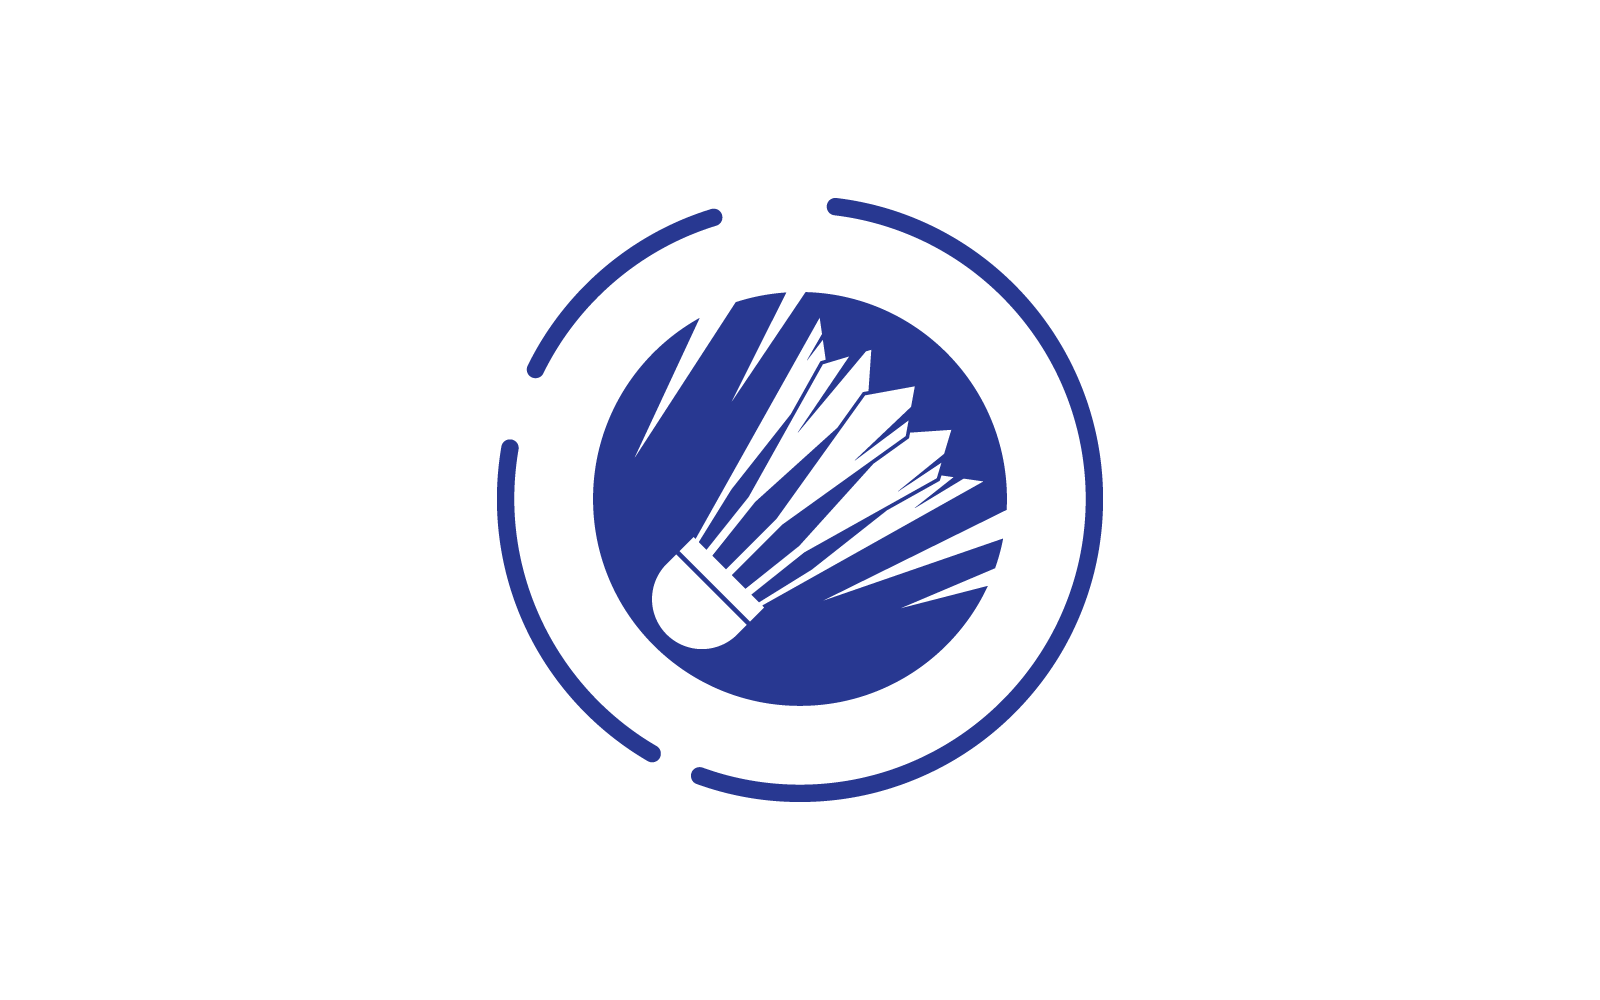 Suttle cock badminton illustration vector design Logo Template